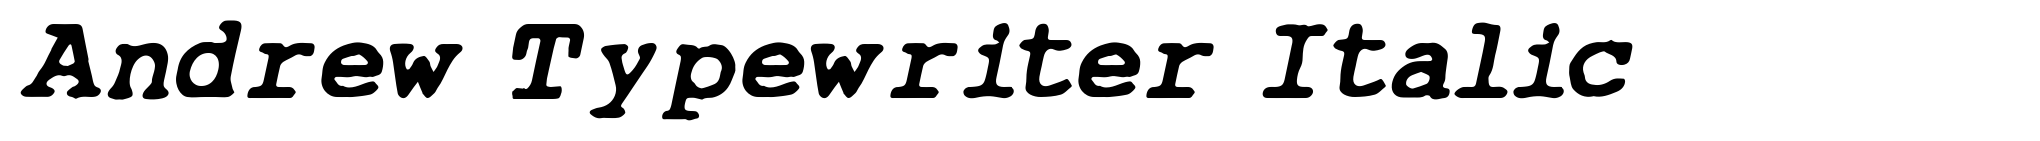 Andrew Typewriter Italic image